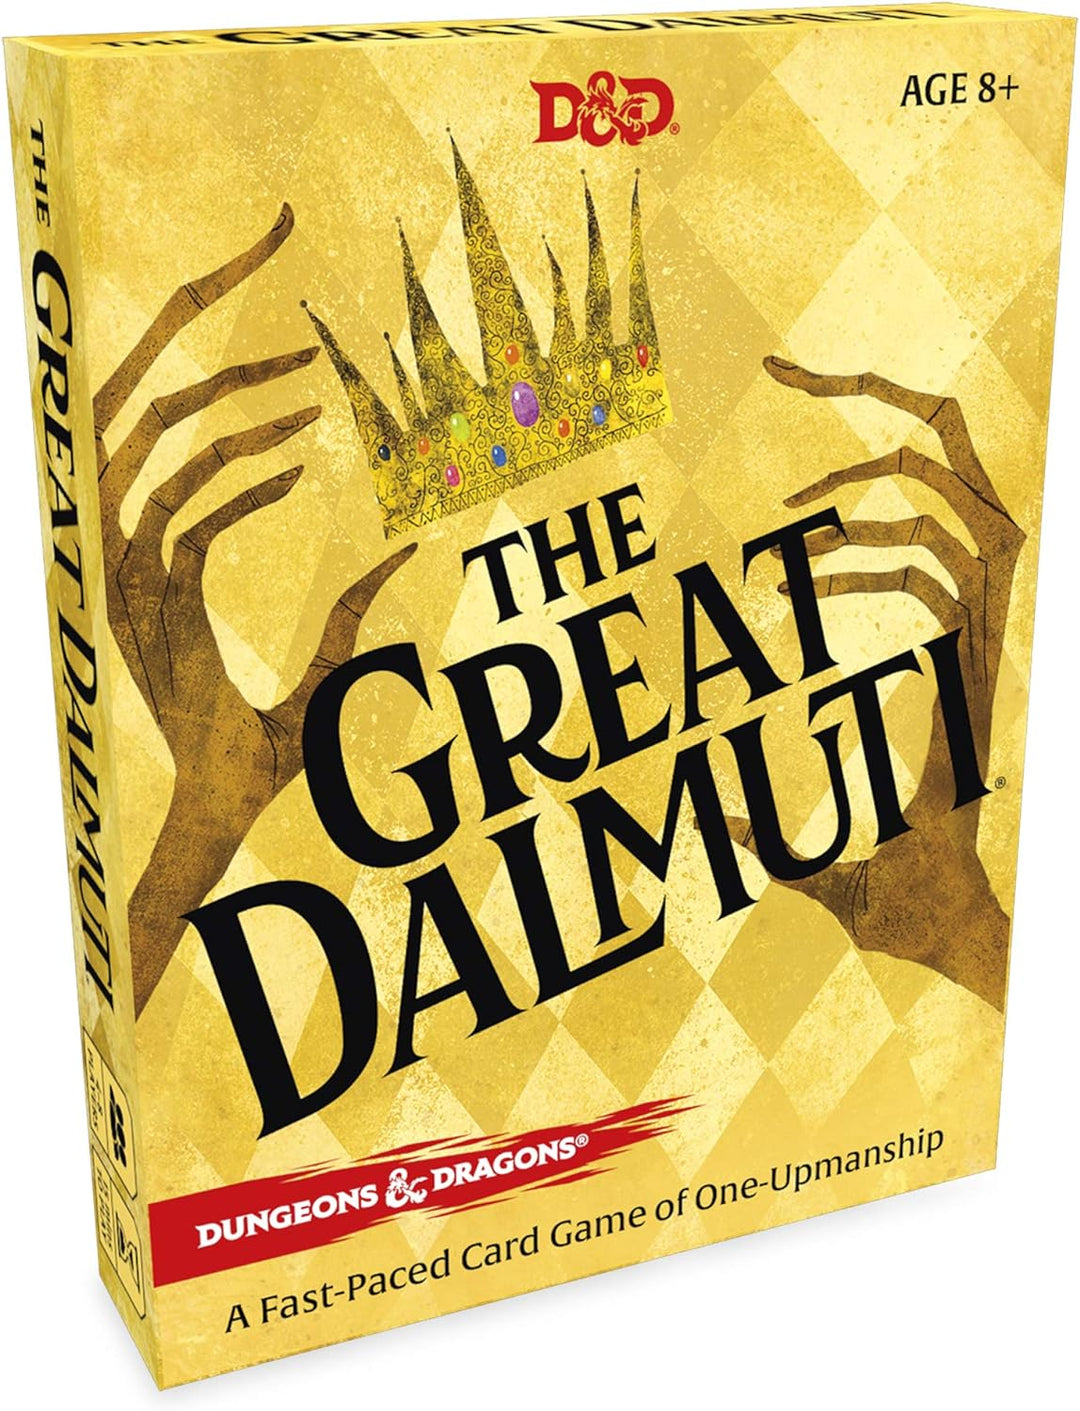 The Great Dalmuti: D&amp;D-Kartenspiel (Dungeons &amp; Dragons)